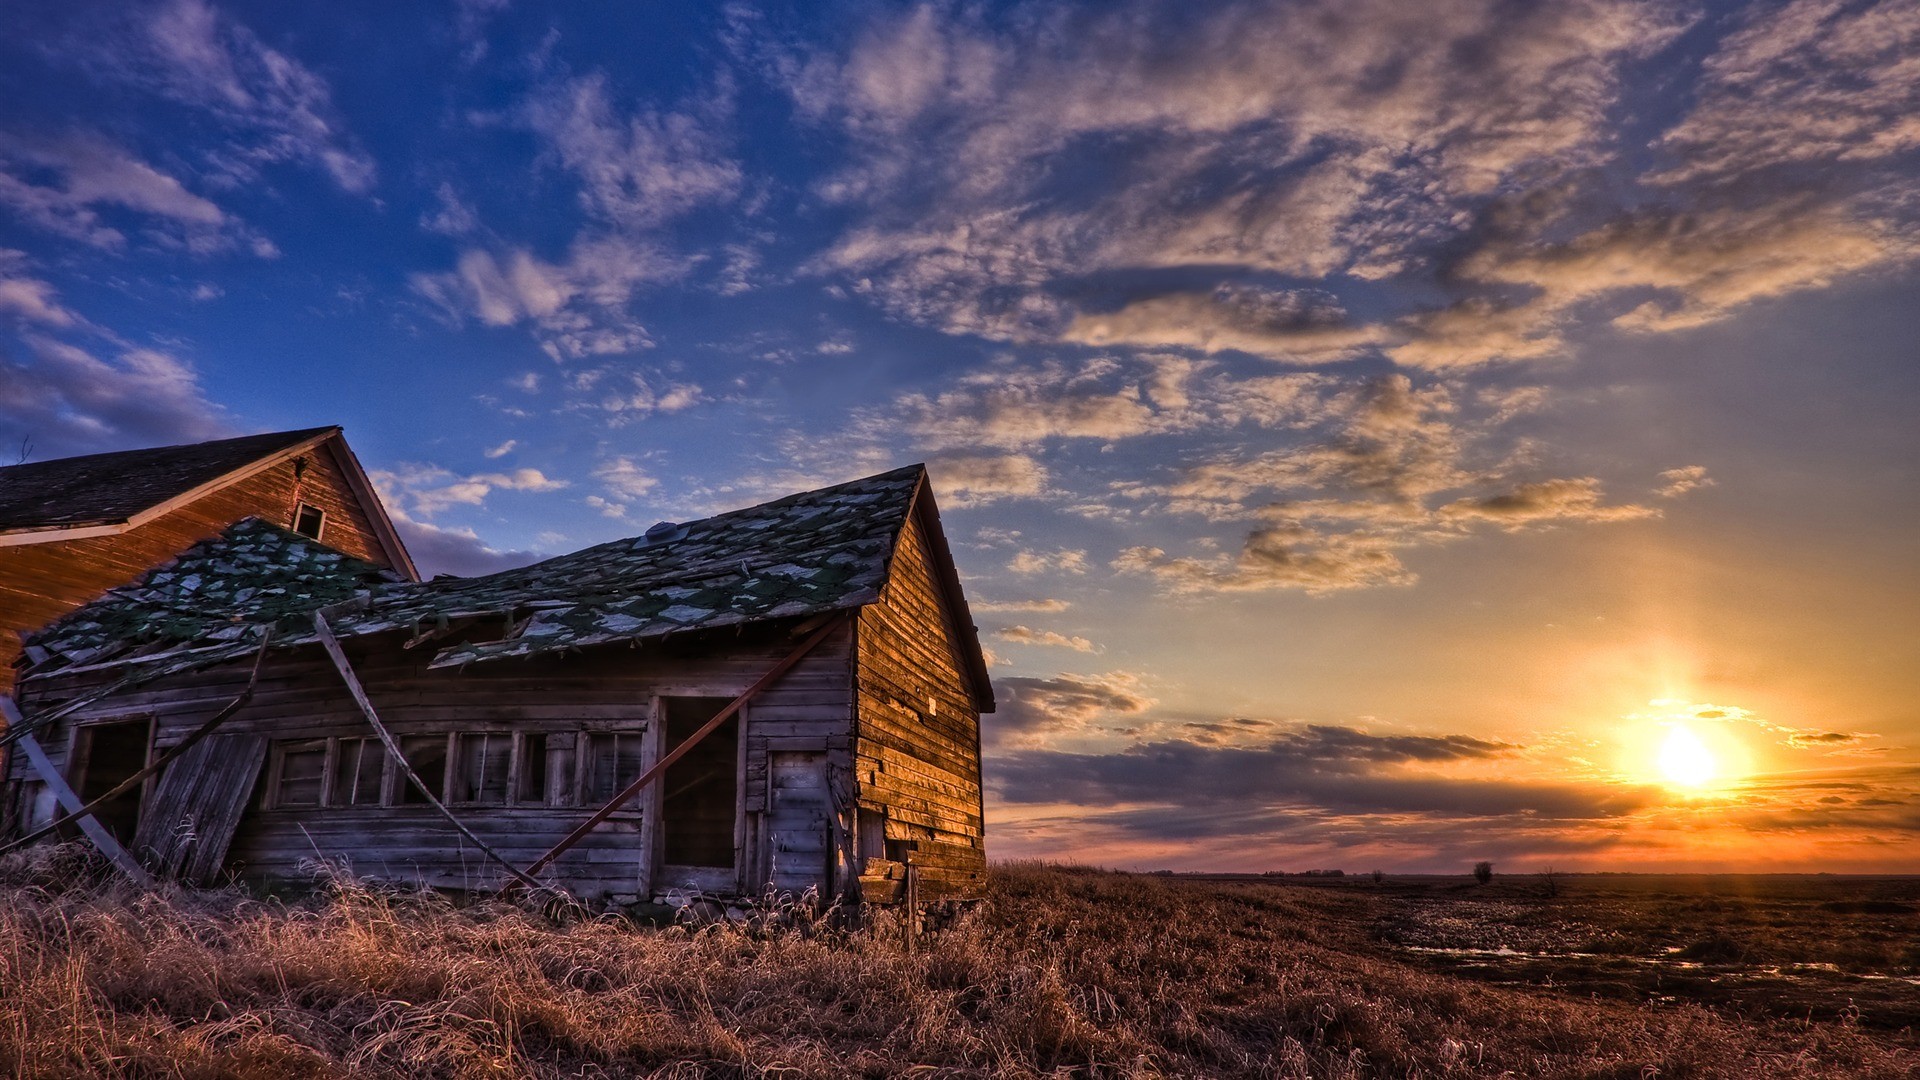 1920x1080 Old rusty farm house in sunset, Full HD wallpaper | Full HD Wallpapers .